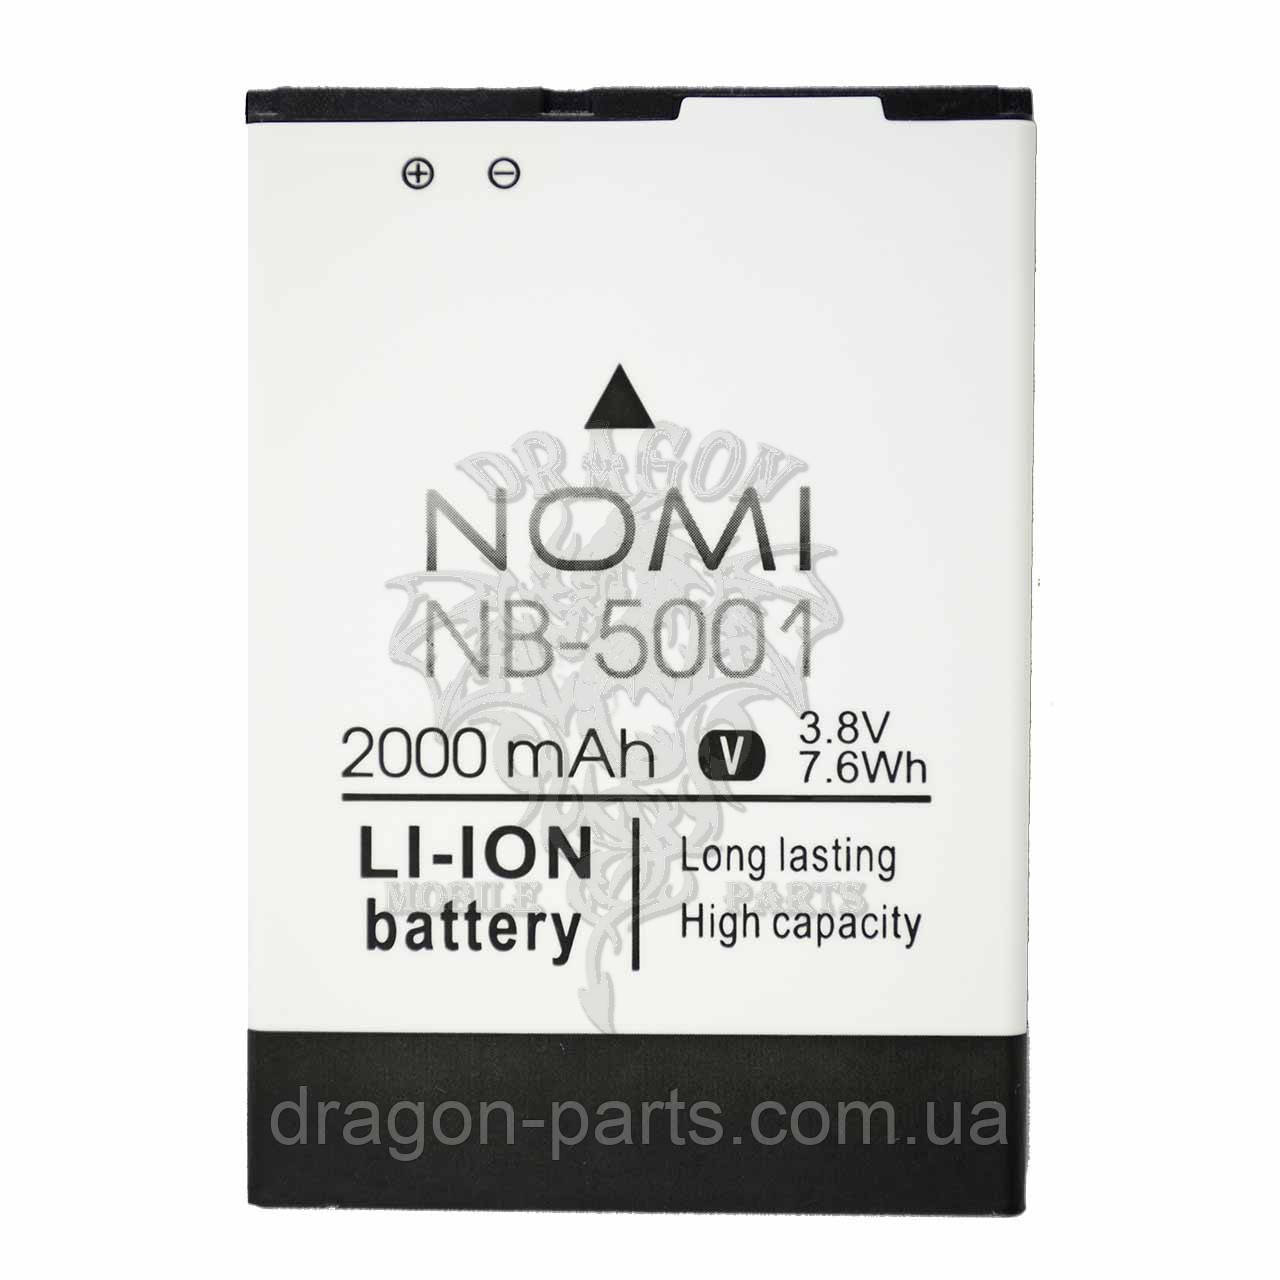 Акумулятор Nomi i5001 Evo M3 (АКБ, Батарея) NB-5001, оригінал